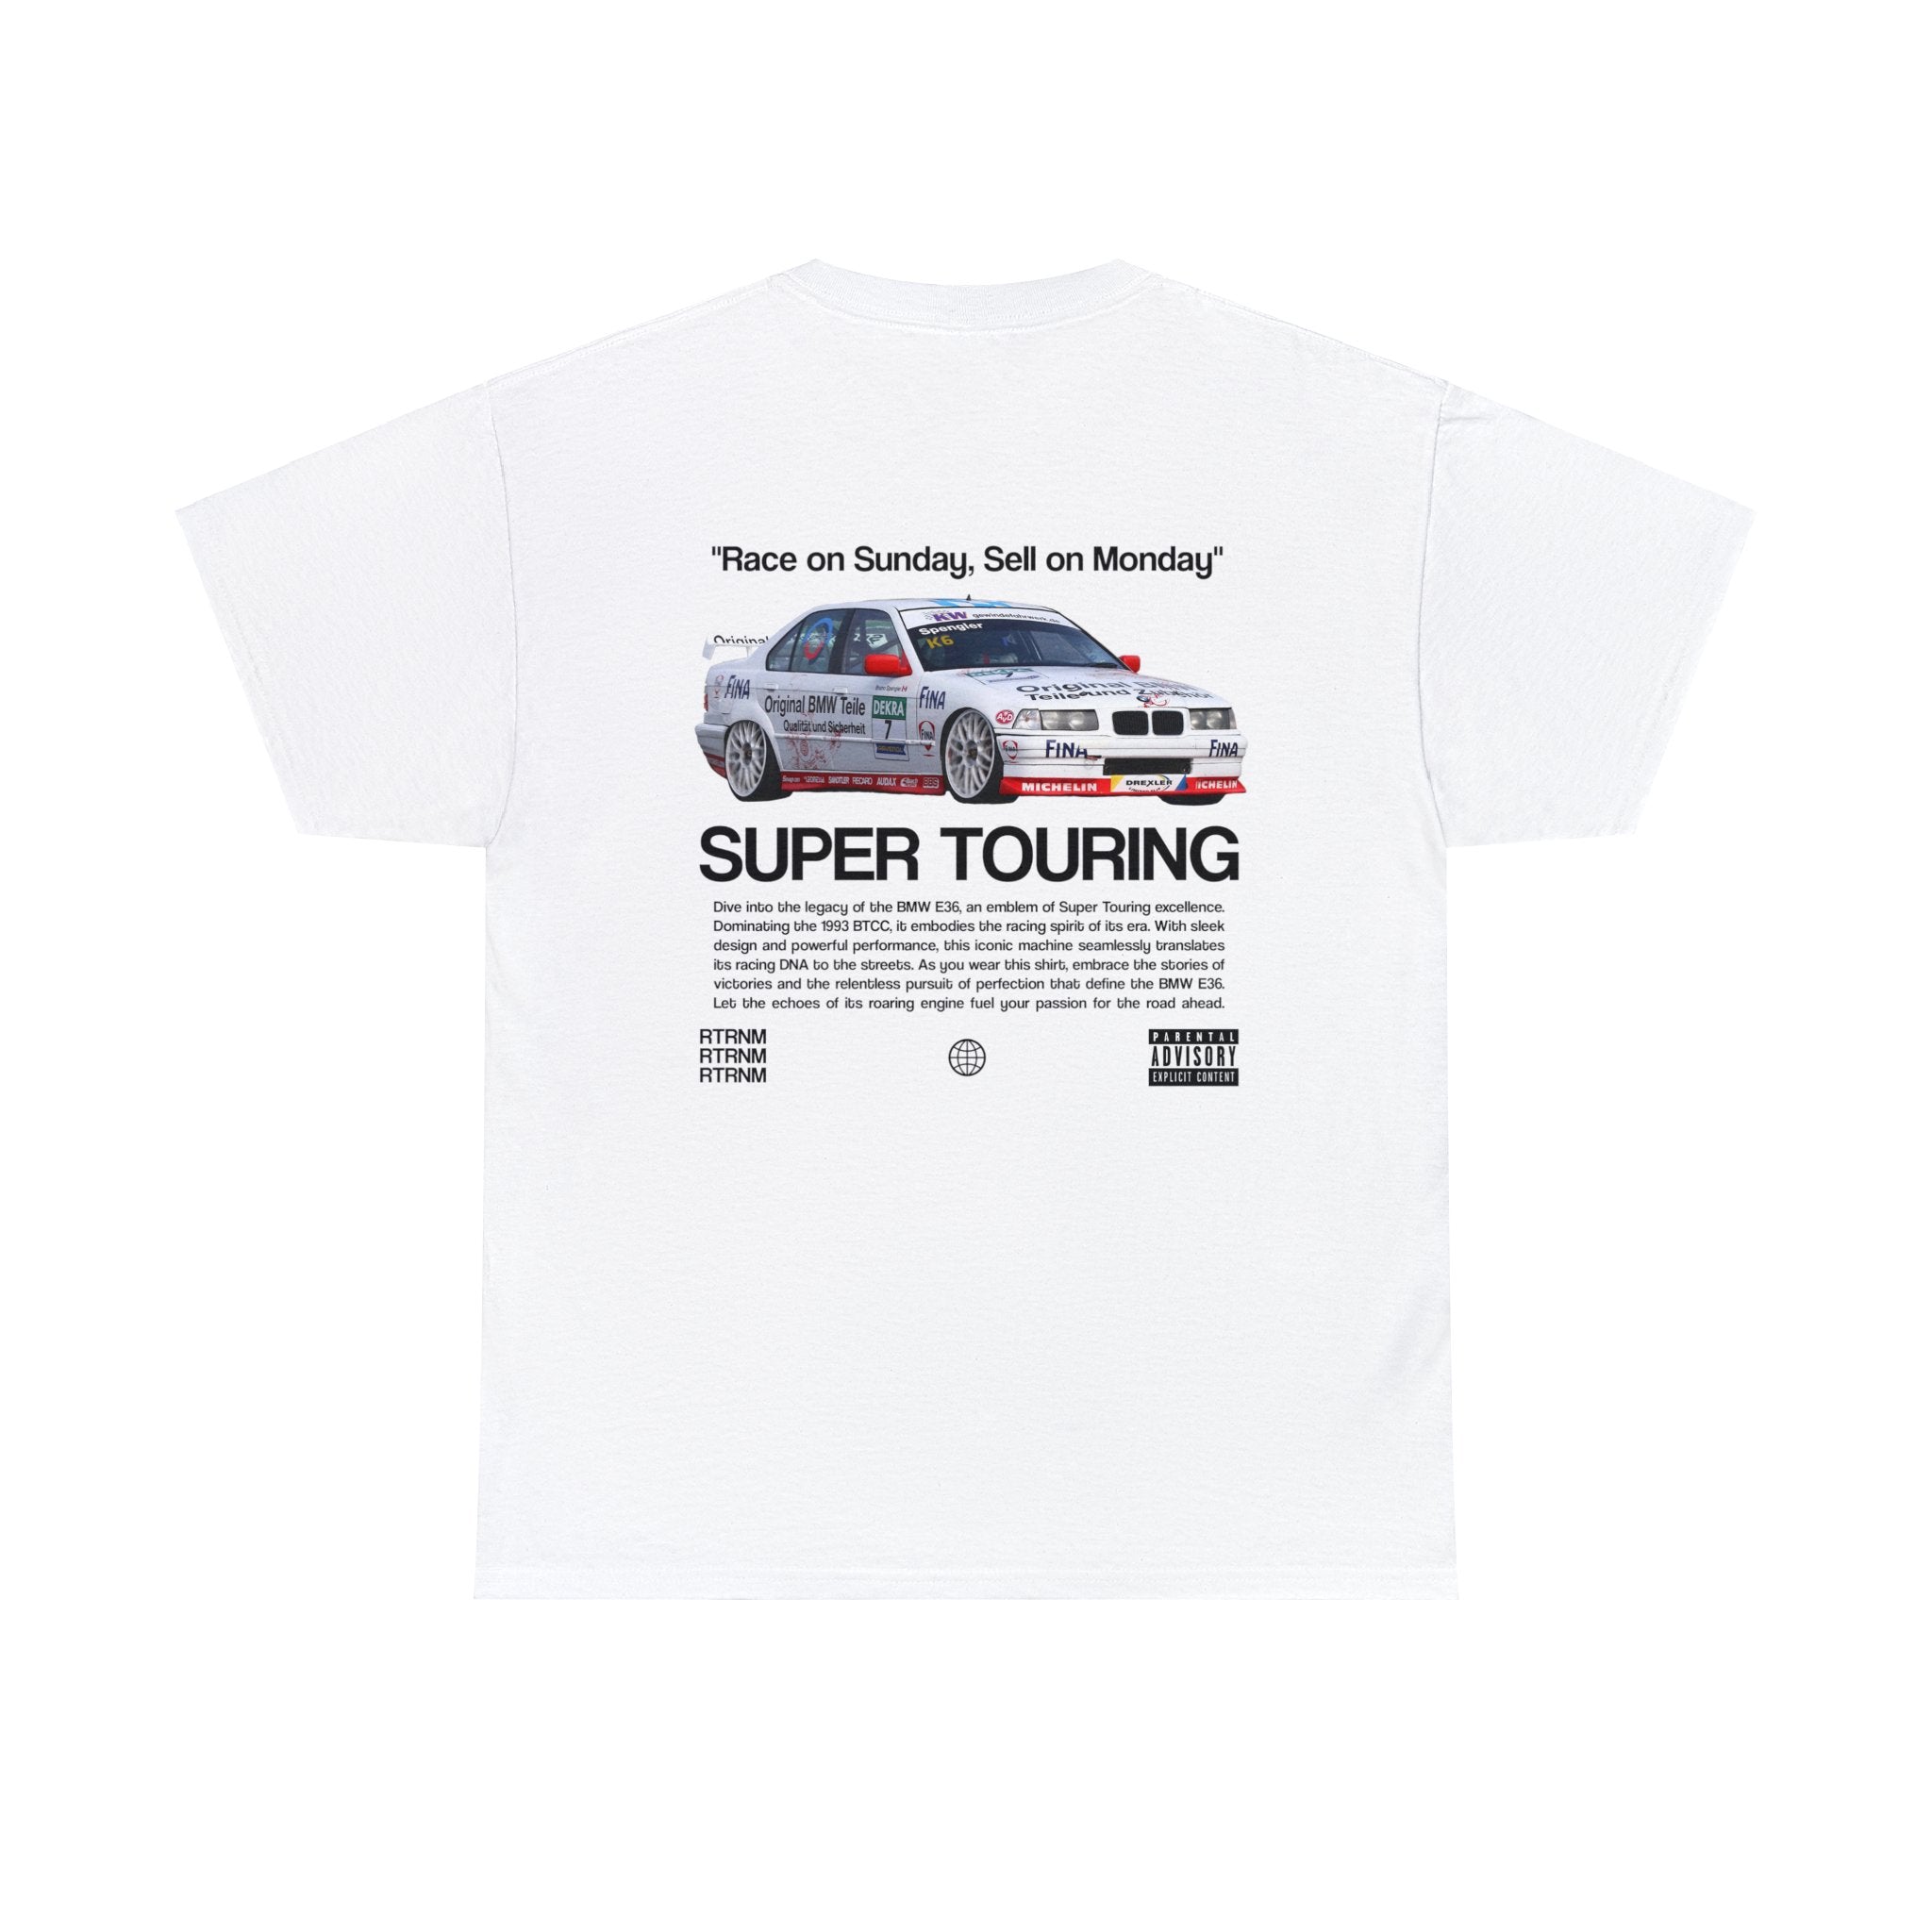 Super Touring T-shirt